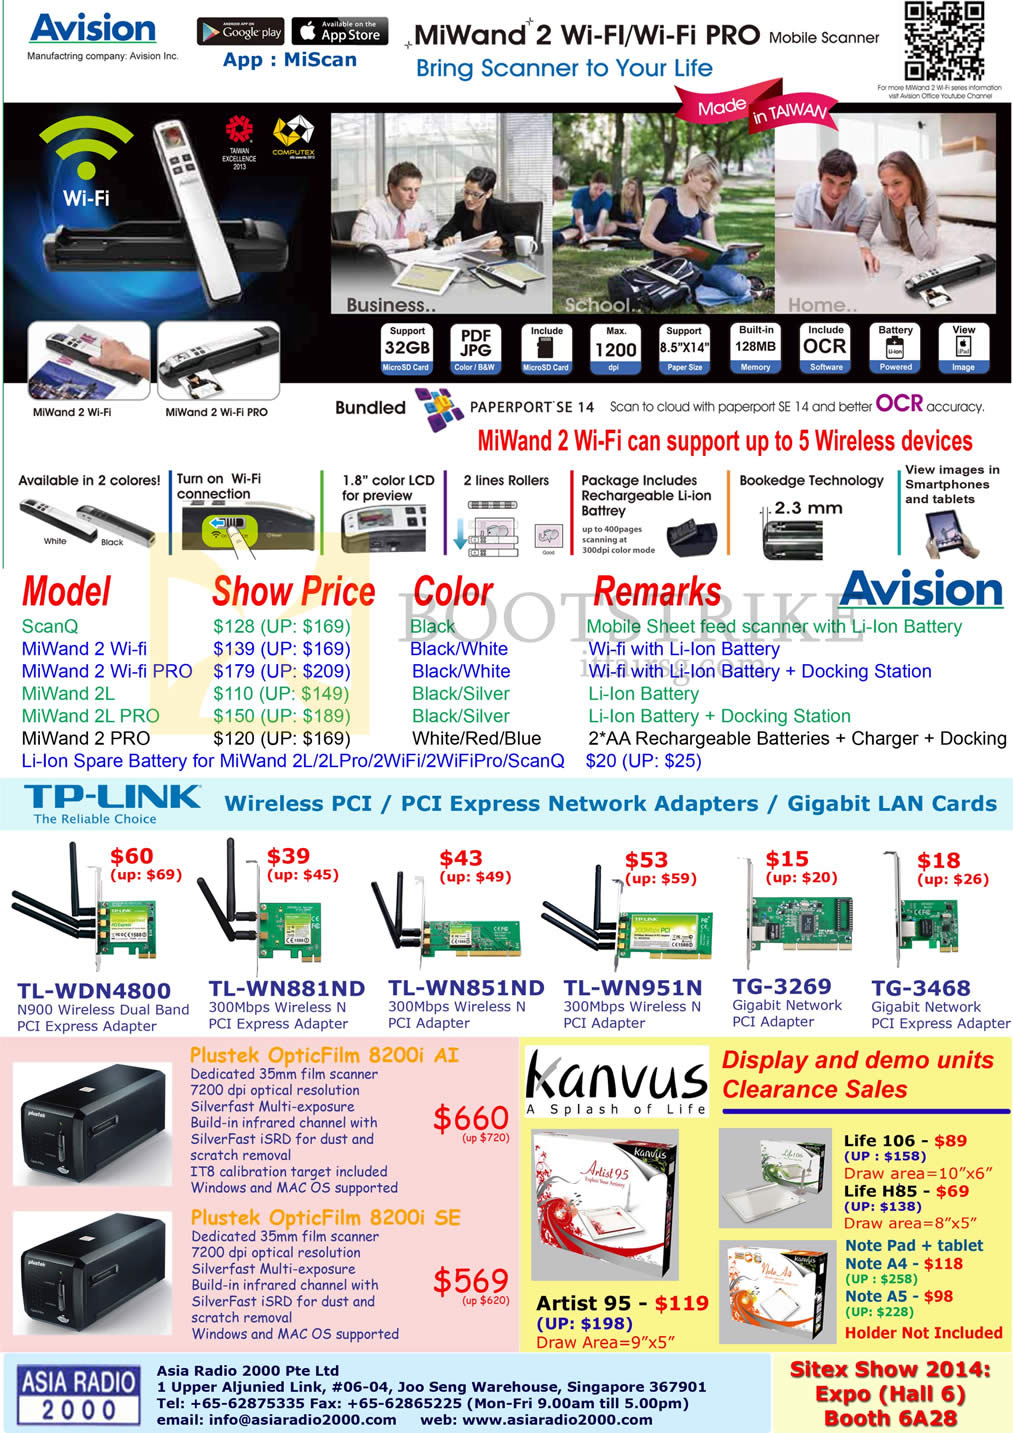 SITEX 2014 price list image brochure of Asia Radio Avision MiWand 2, ScanQ, Pro, TP-Link Wireless PCI Express Adapter, Plustek OpticFilm 8200i Film Scanner, Kanvus Artist, Life